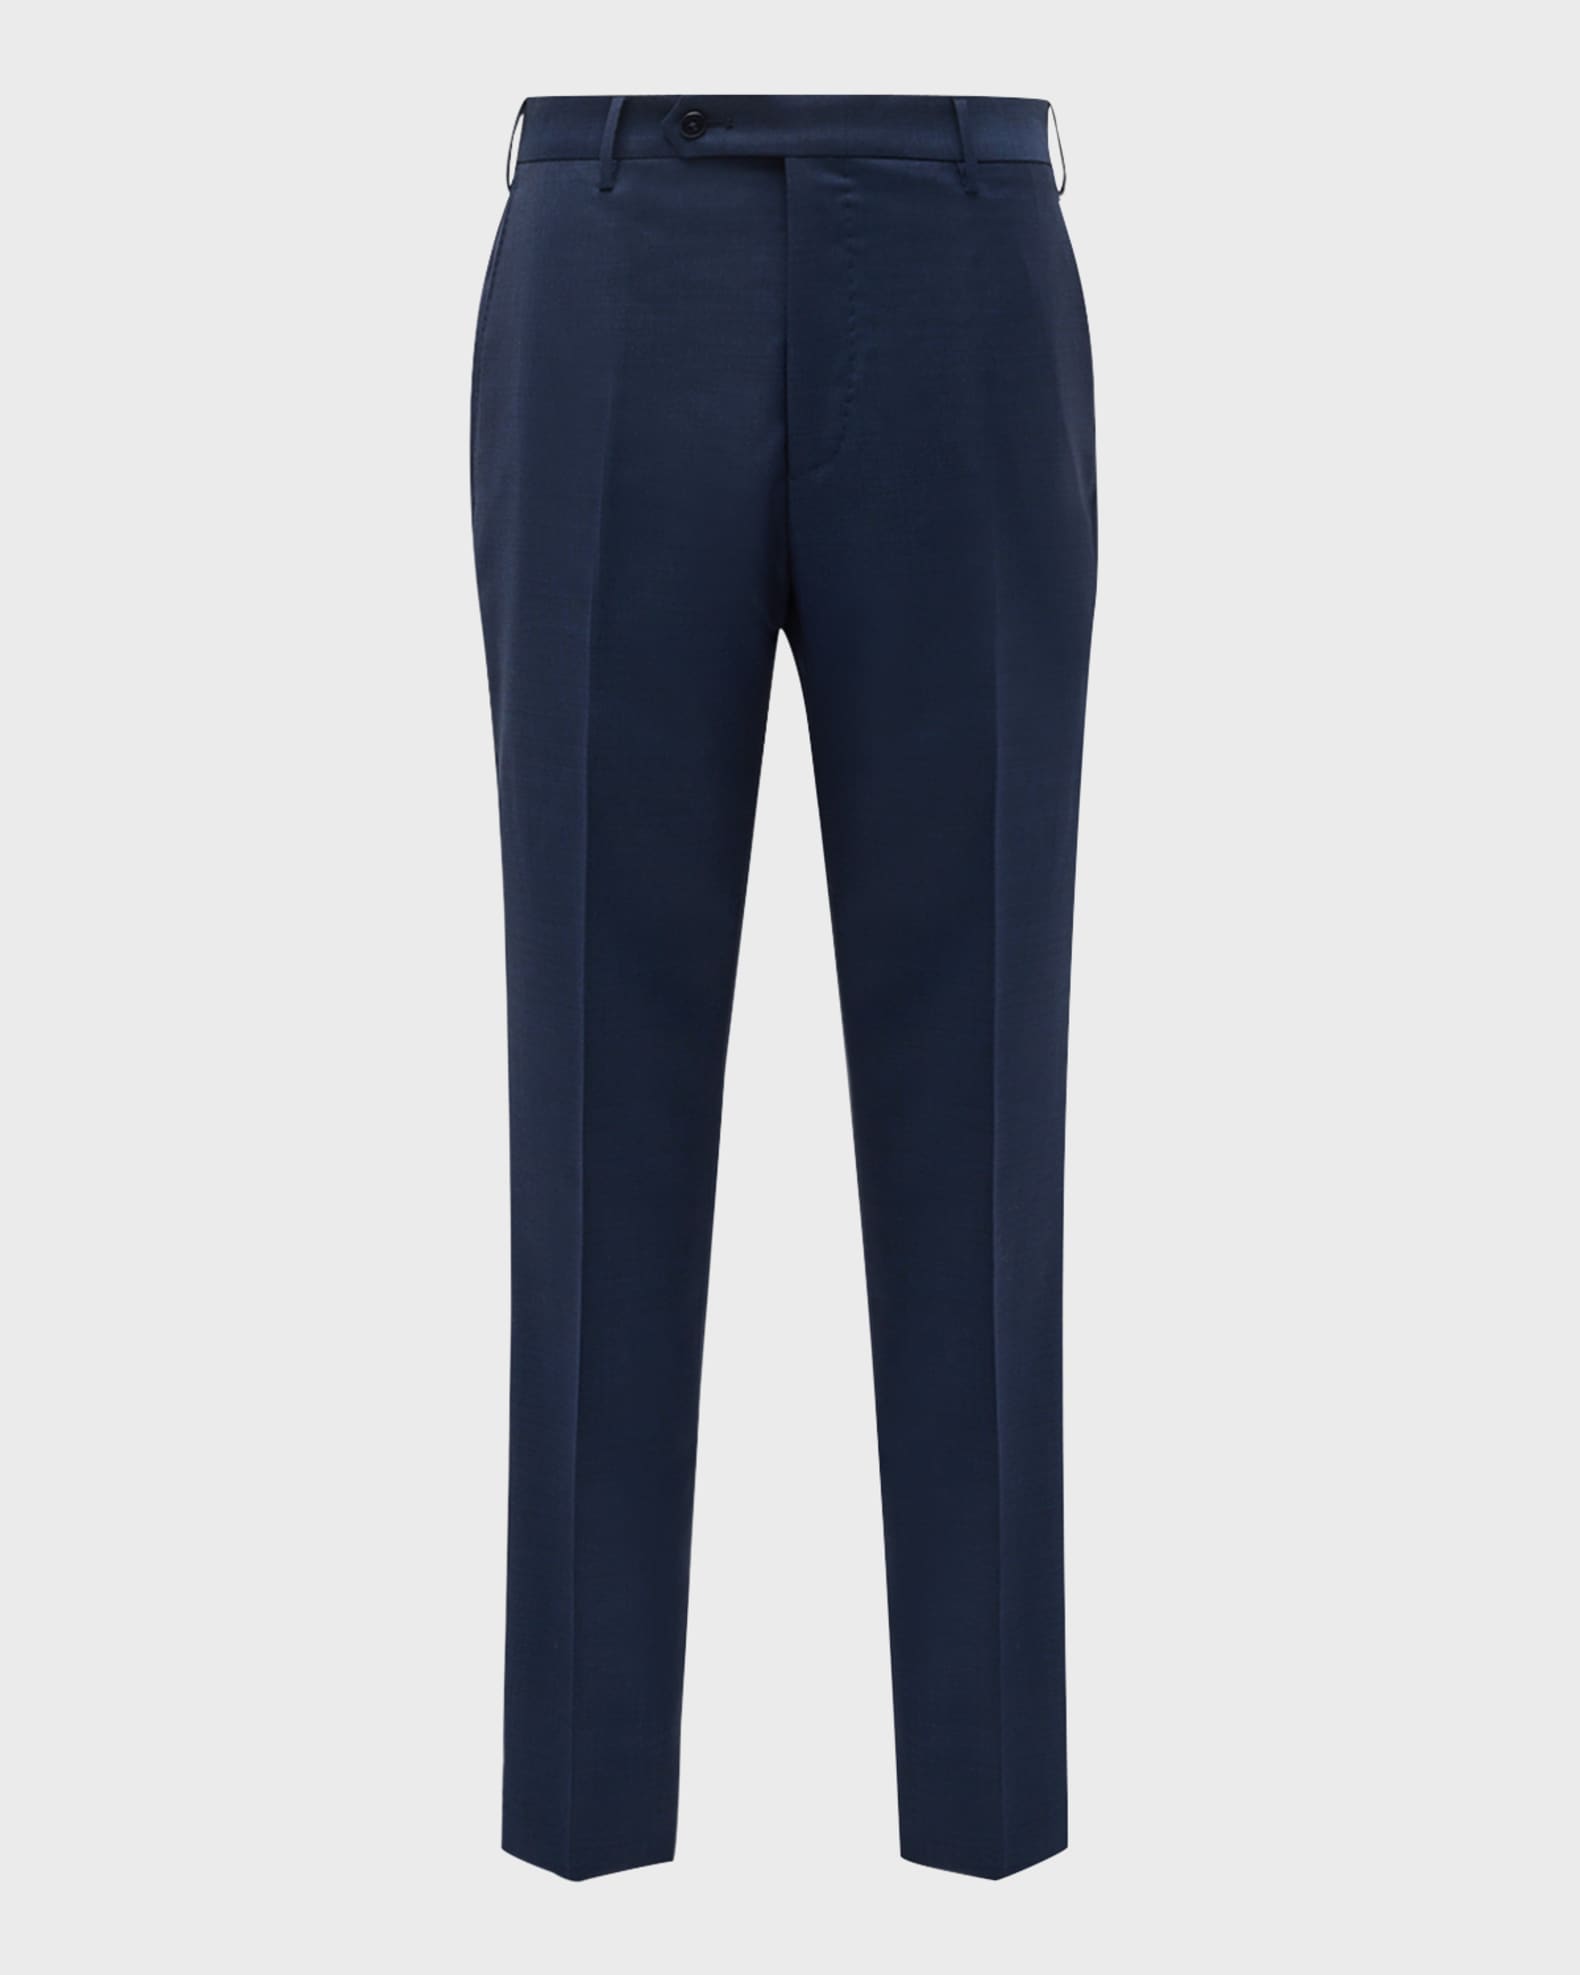 Zanella Men's Parker Classic Flat-Front Trousers | Neiman Marcus